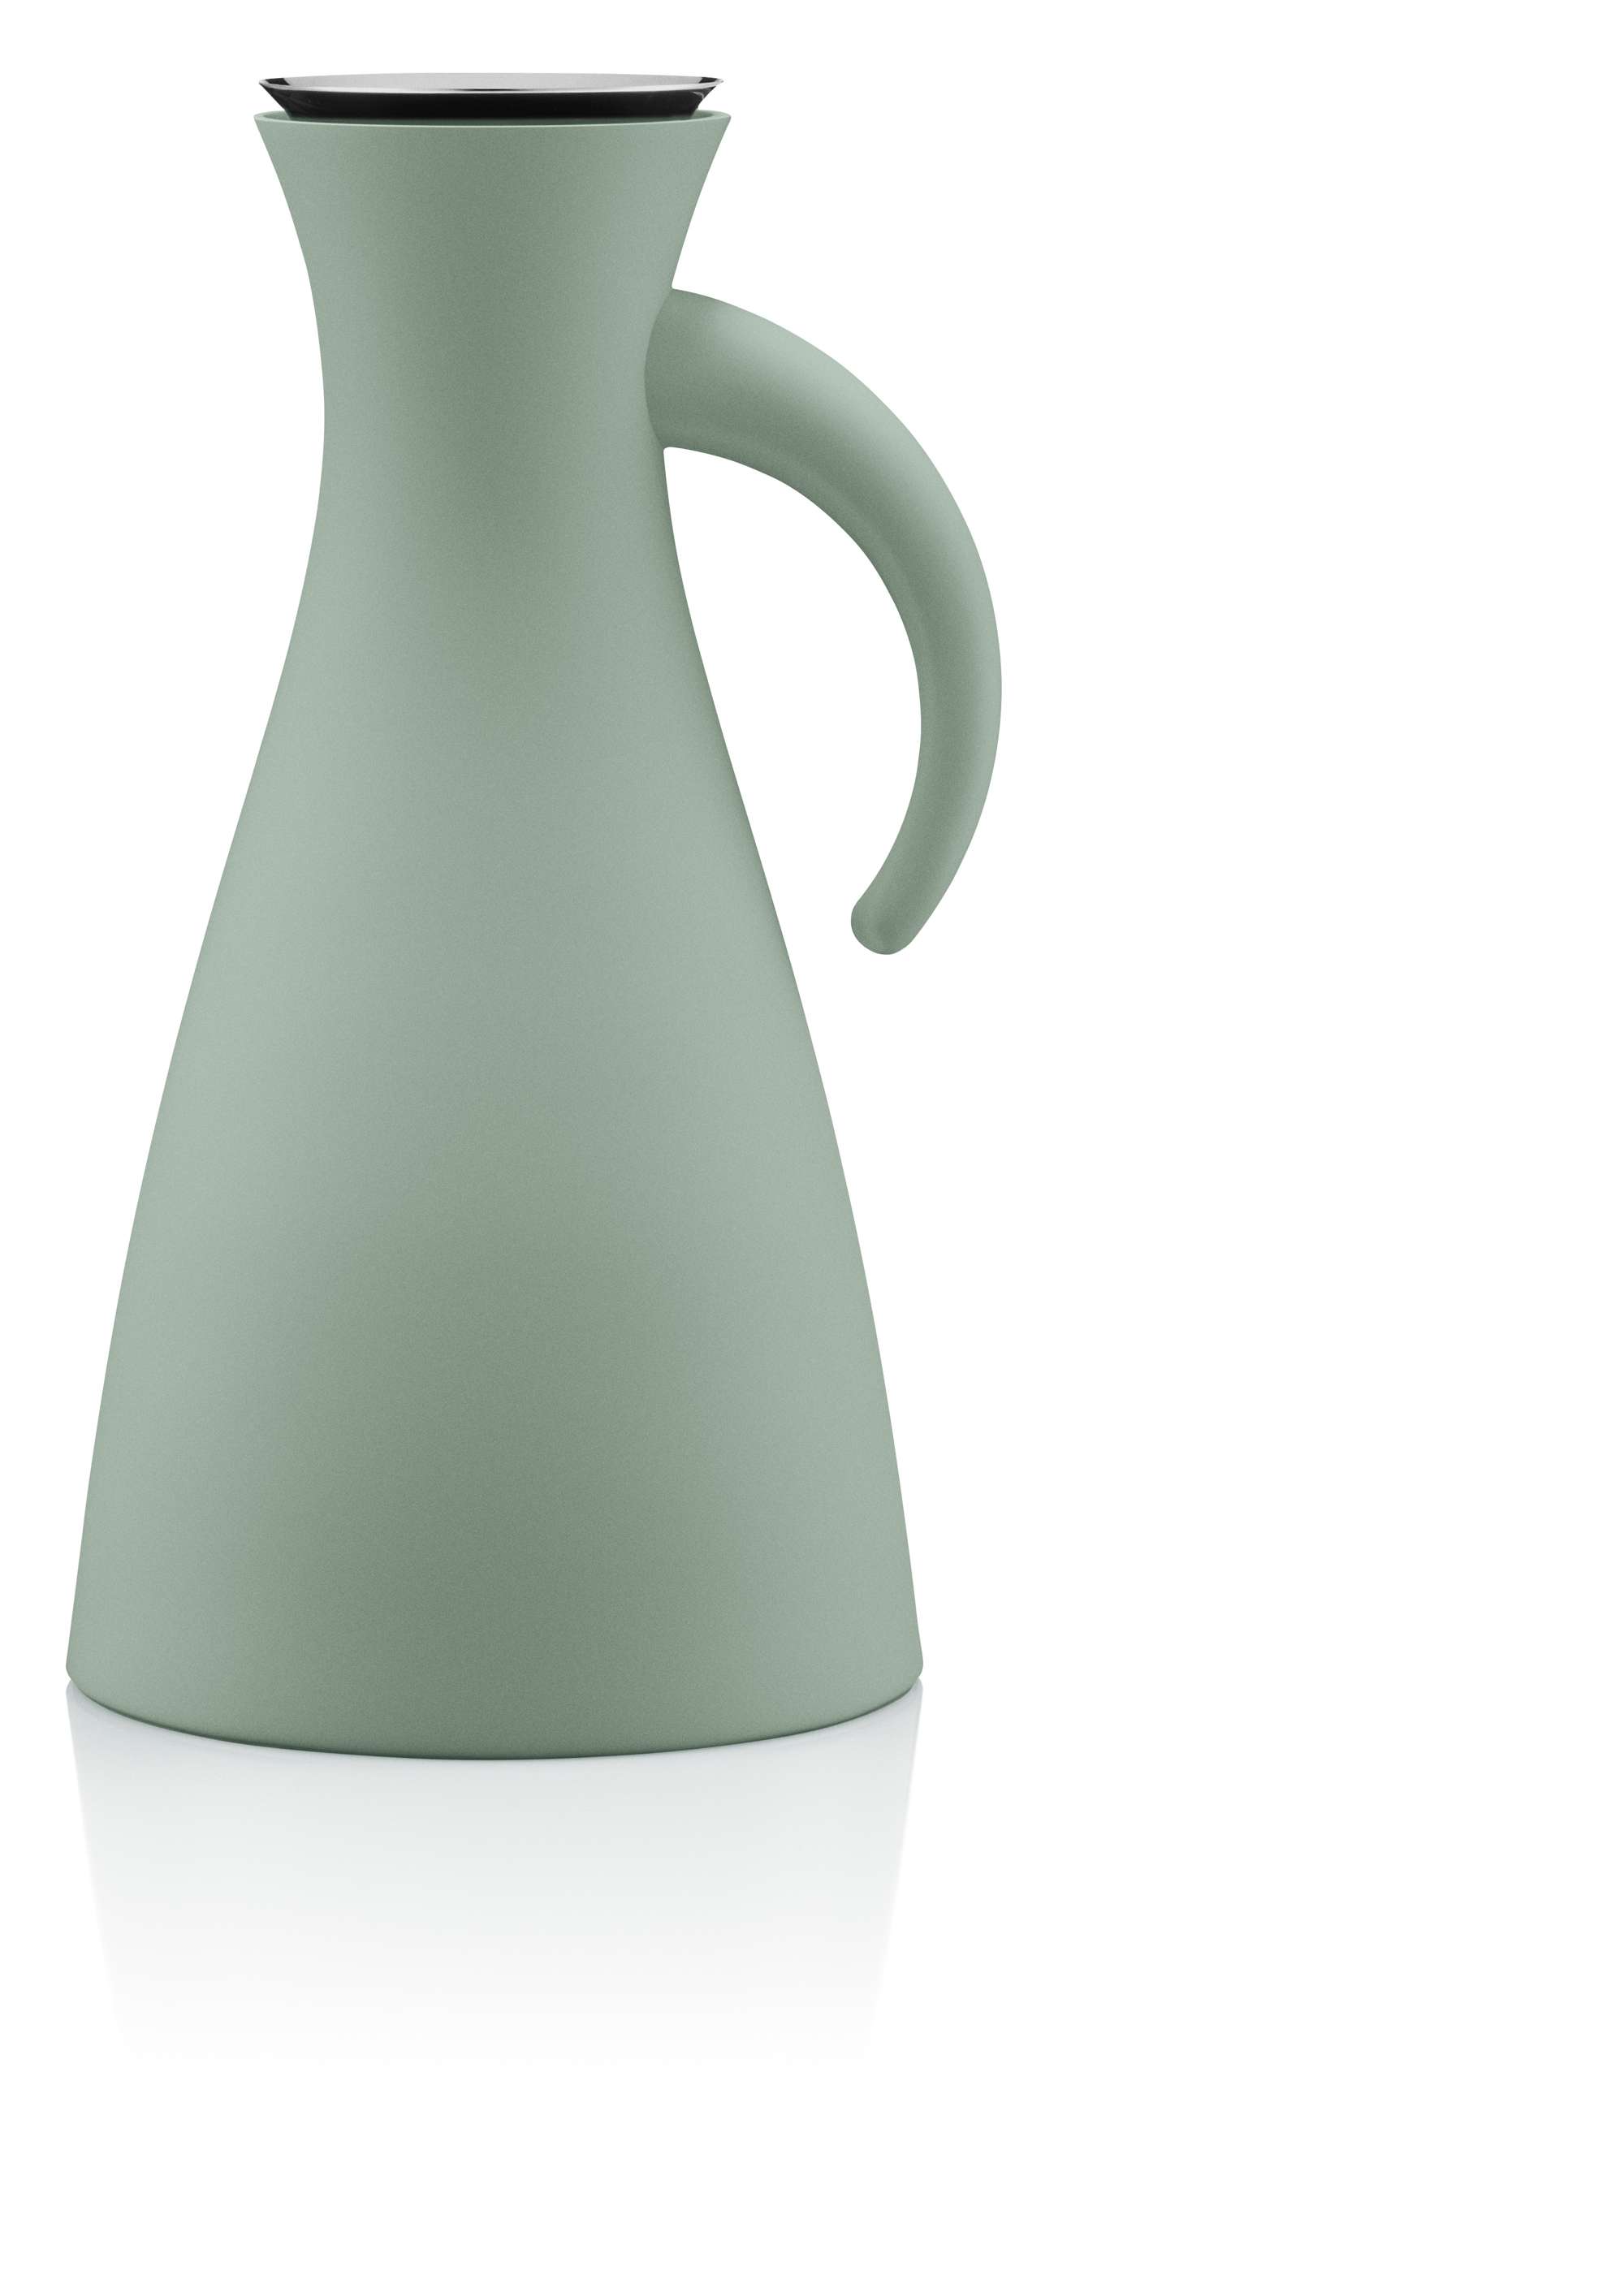 Vacuum jug - 1 liter - Faded green